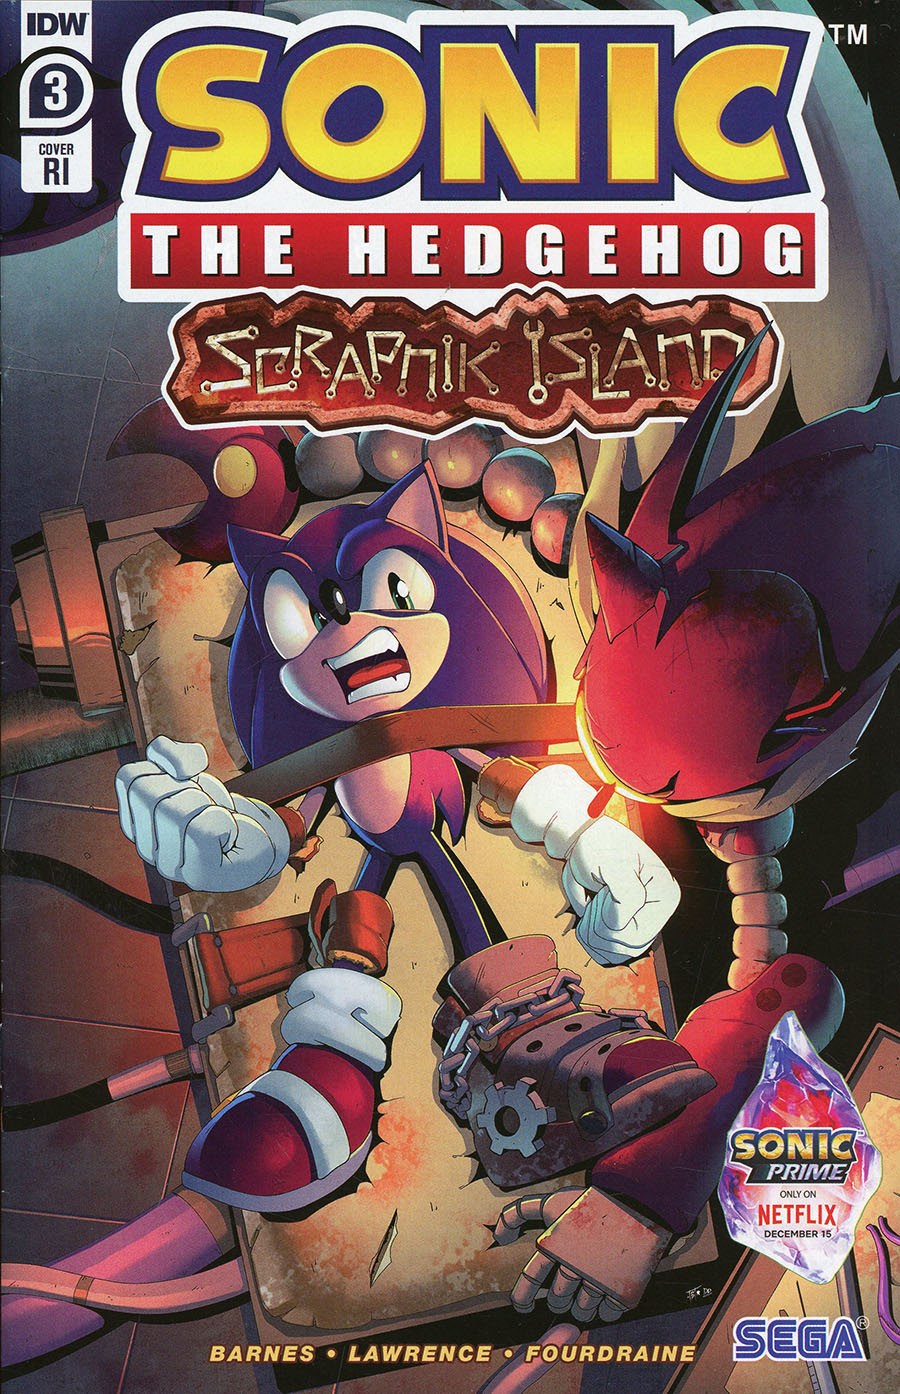 Sonic The Hedgehog Scrapnik Island #3 Cover C Incentive Adam Bryce Thomas Variant Cover